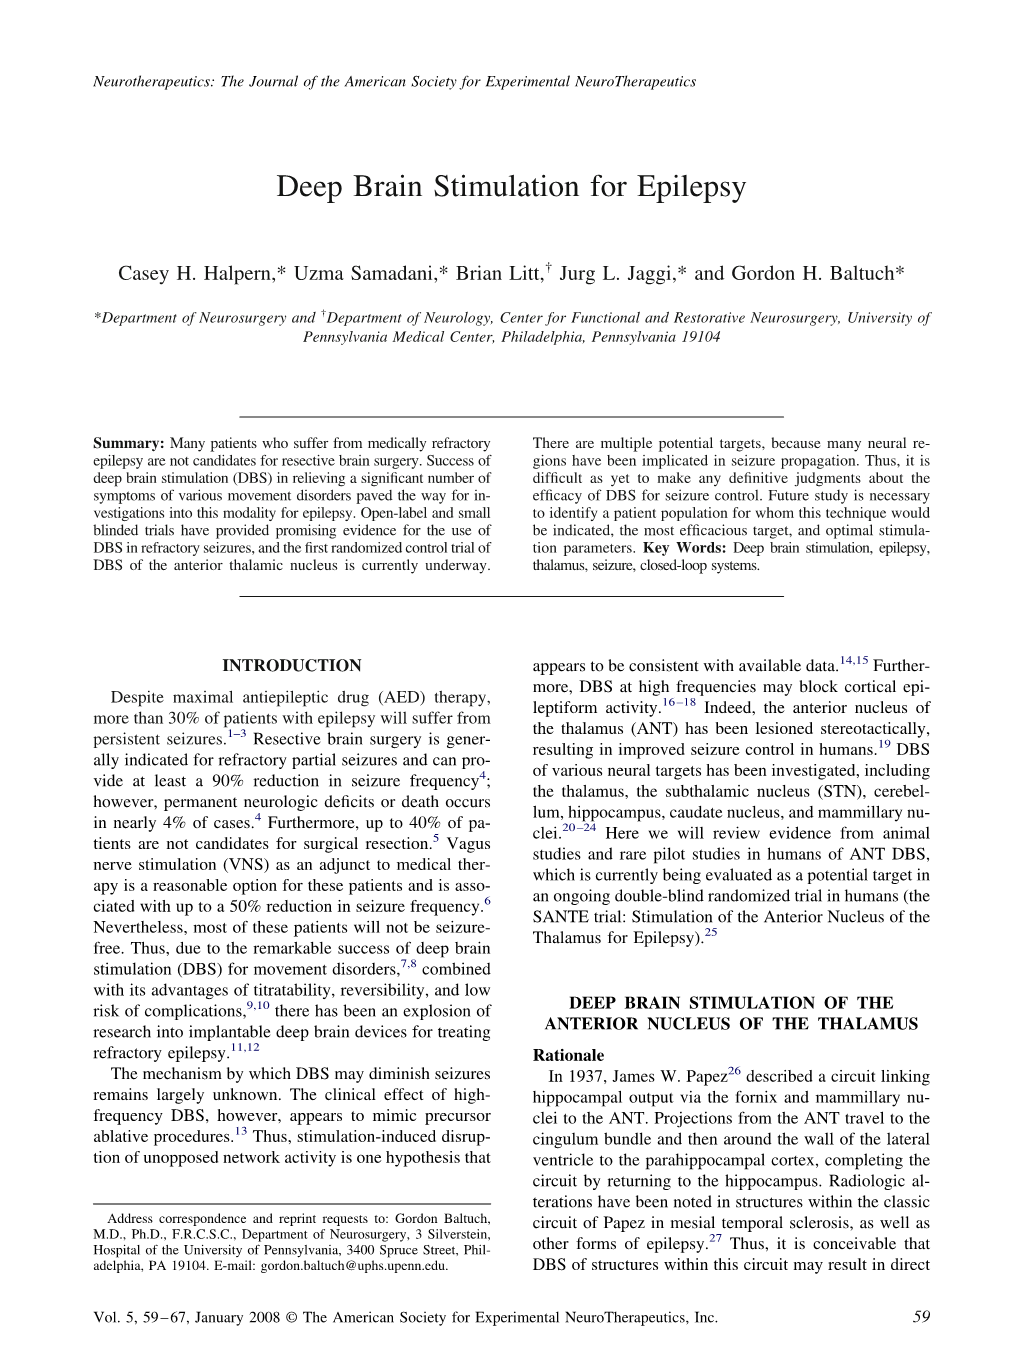 Deep Brain Stimulation for Epilepsy